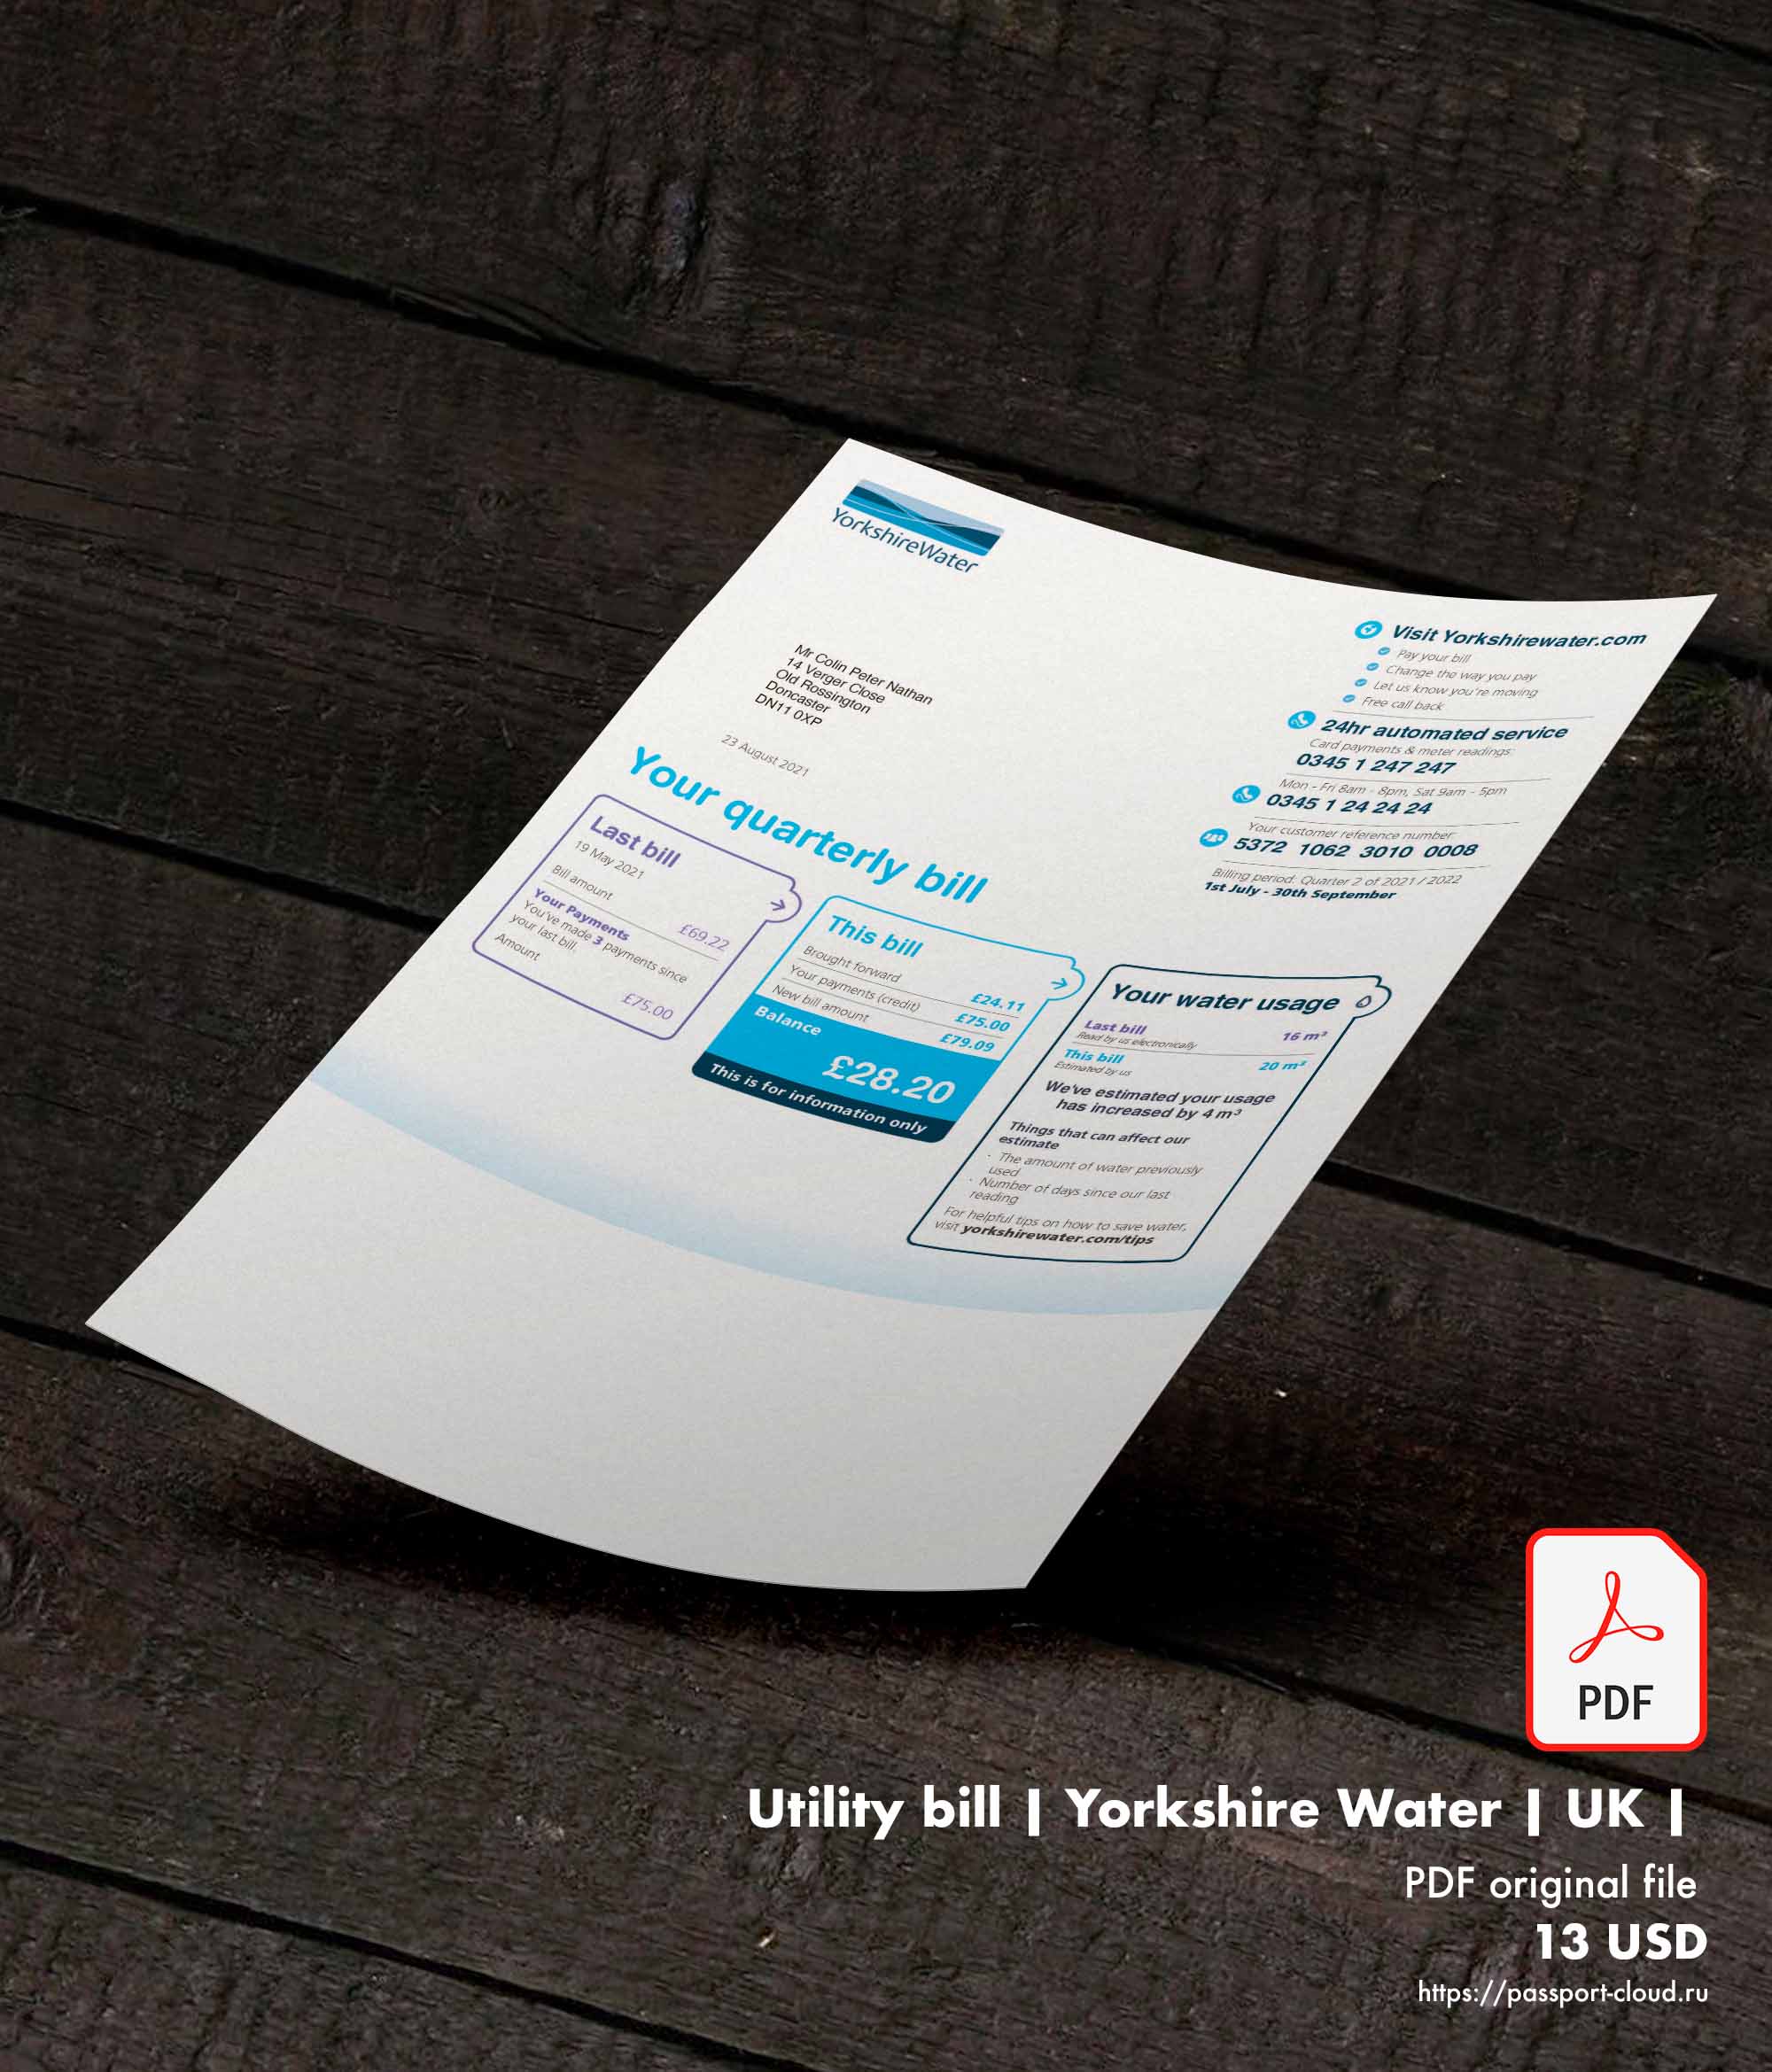 Utility bill | Yorkshire Water | UK | 1